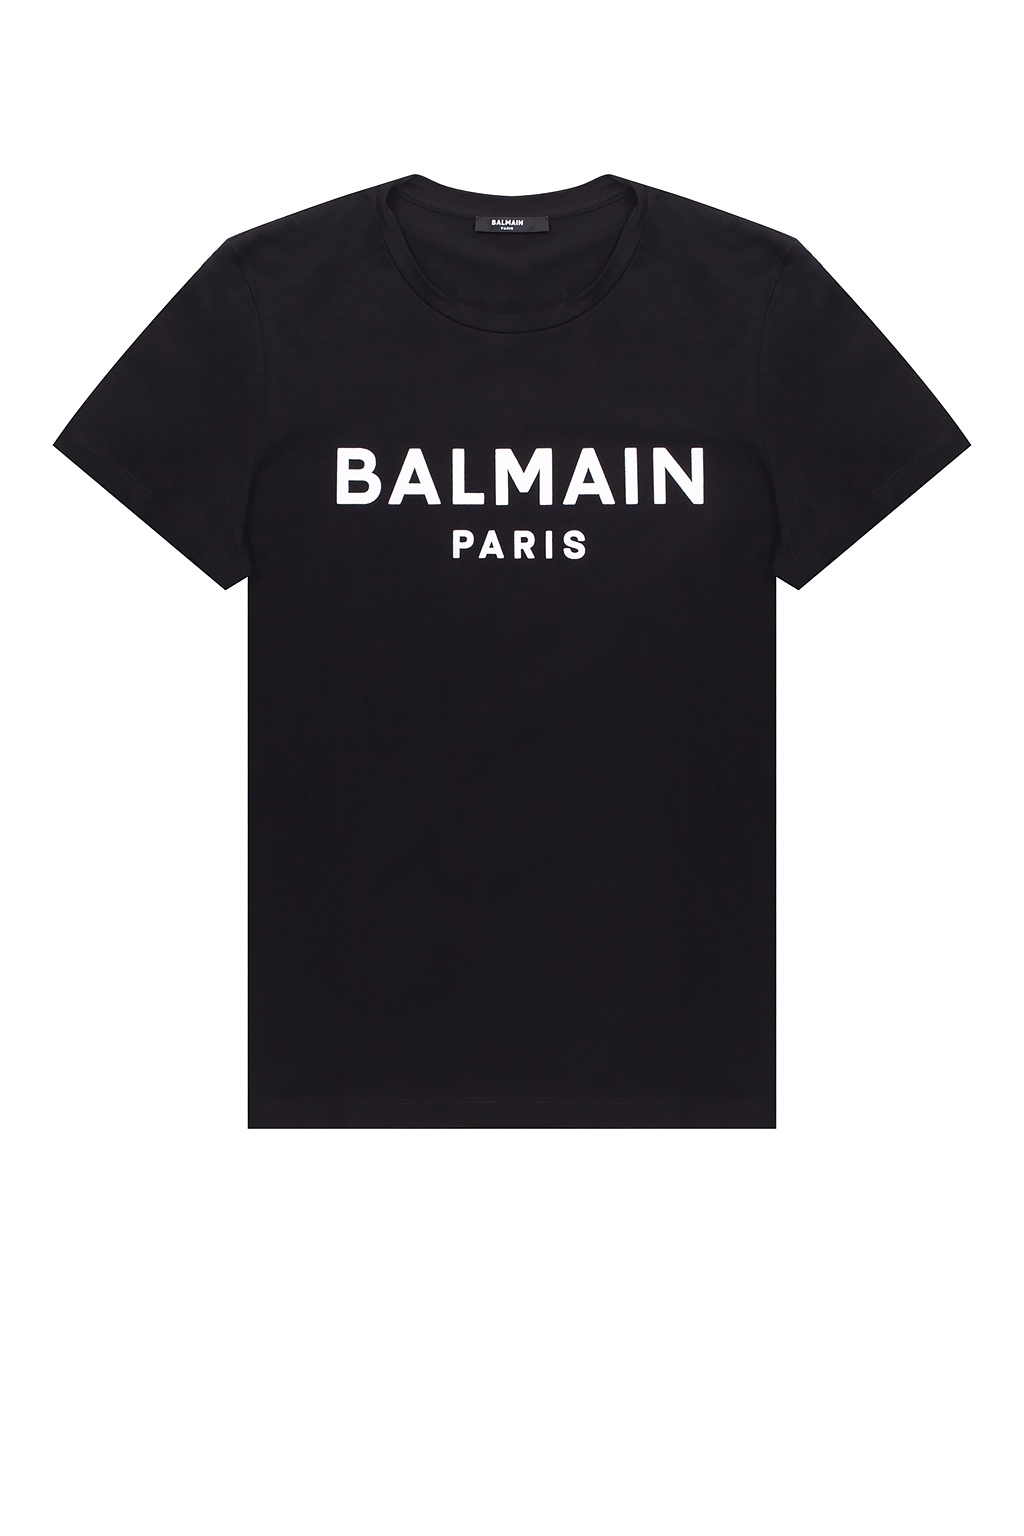 Balmain Logo T Shirt Flash Sales, 56% OFF | www.ingeniovirtual.com